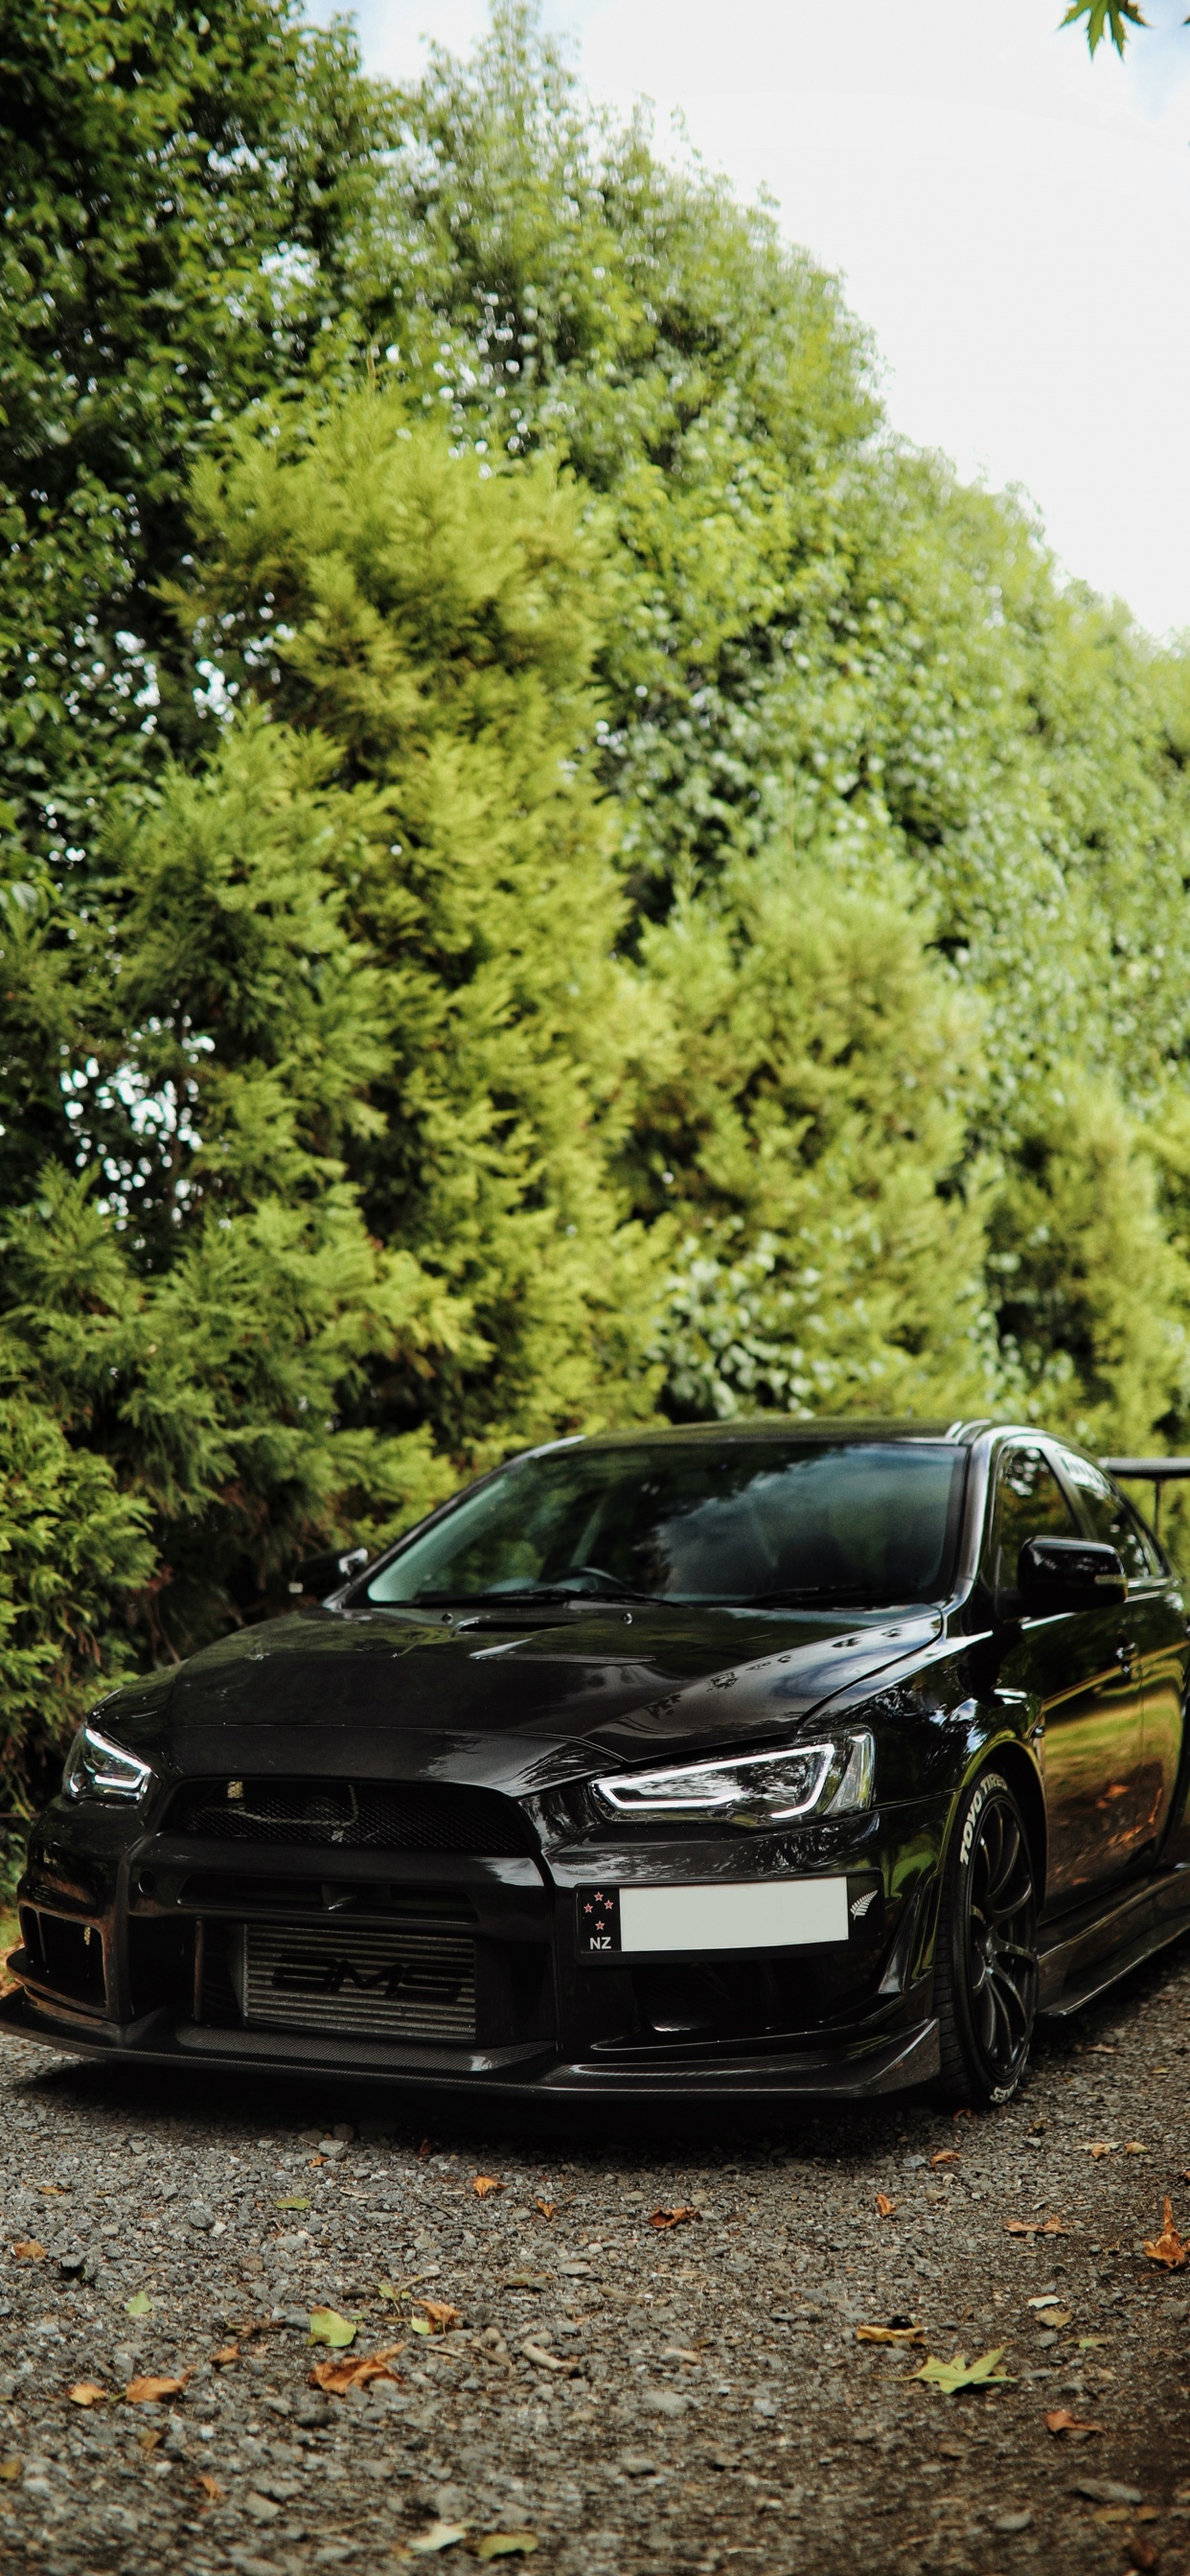 Black Chevrolet Camaro on Road During Daytime. Wallpaper in 1242x2688 Resolution